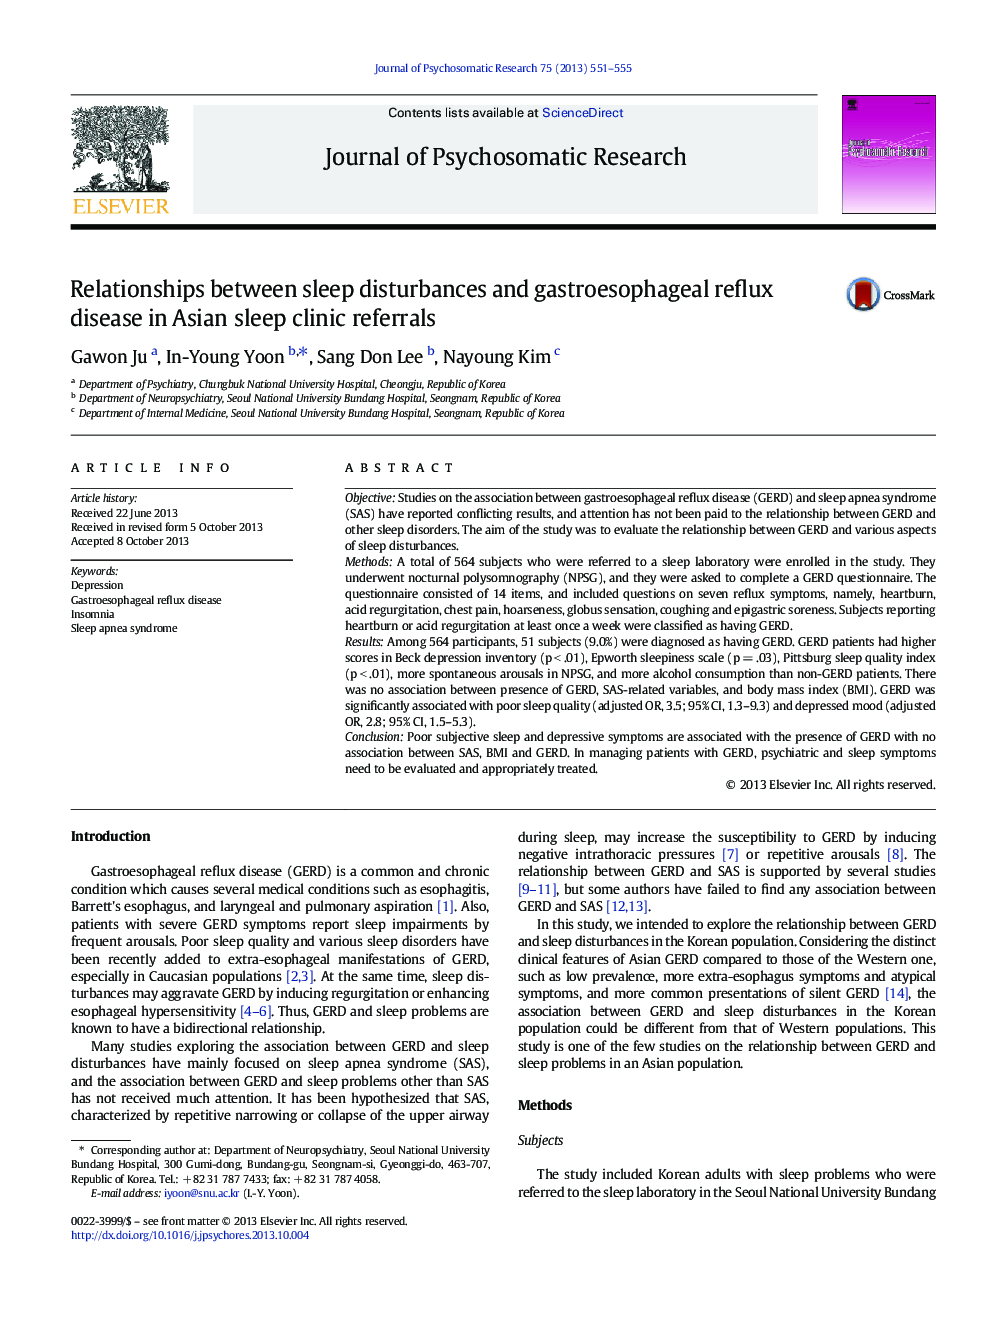 Relationships between sleep disturbances and gastroesophageal reflux disease in Asian sleep clinic referrals